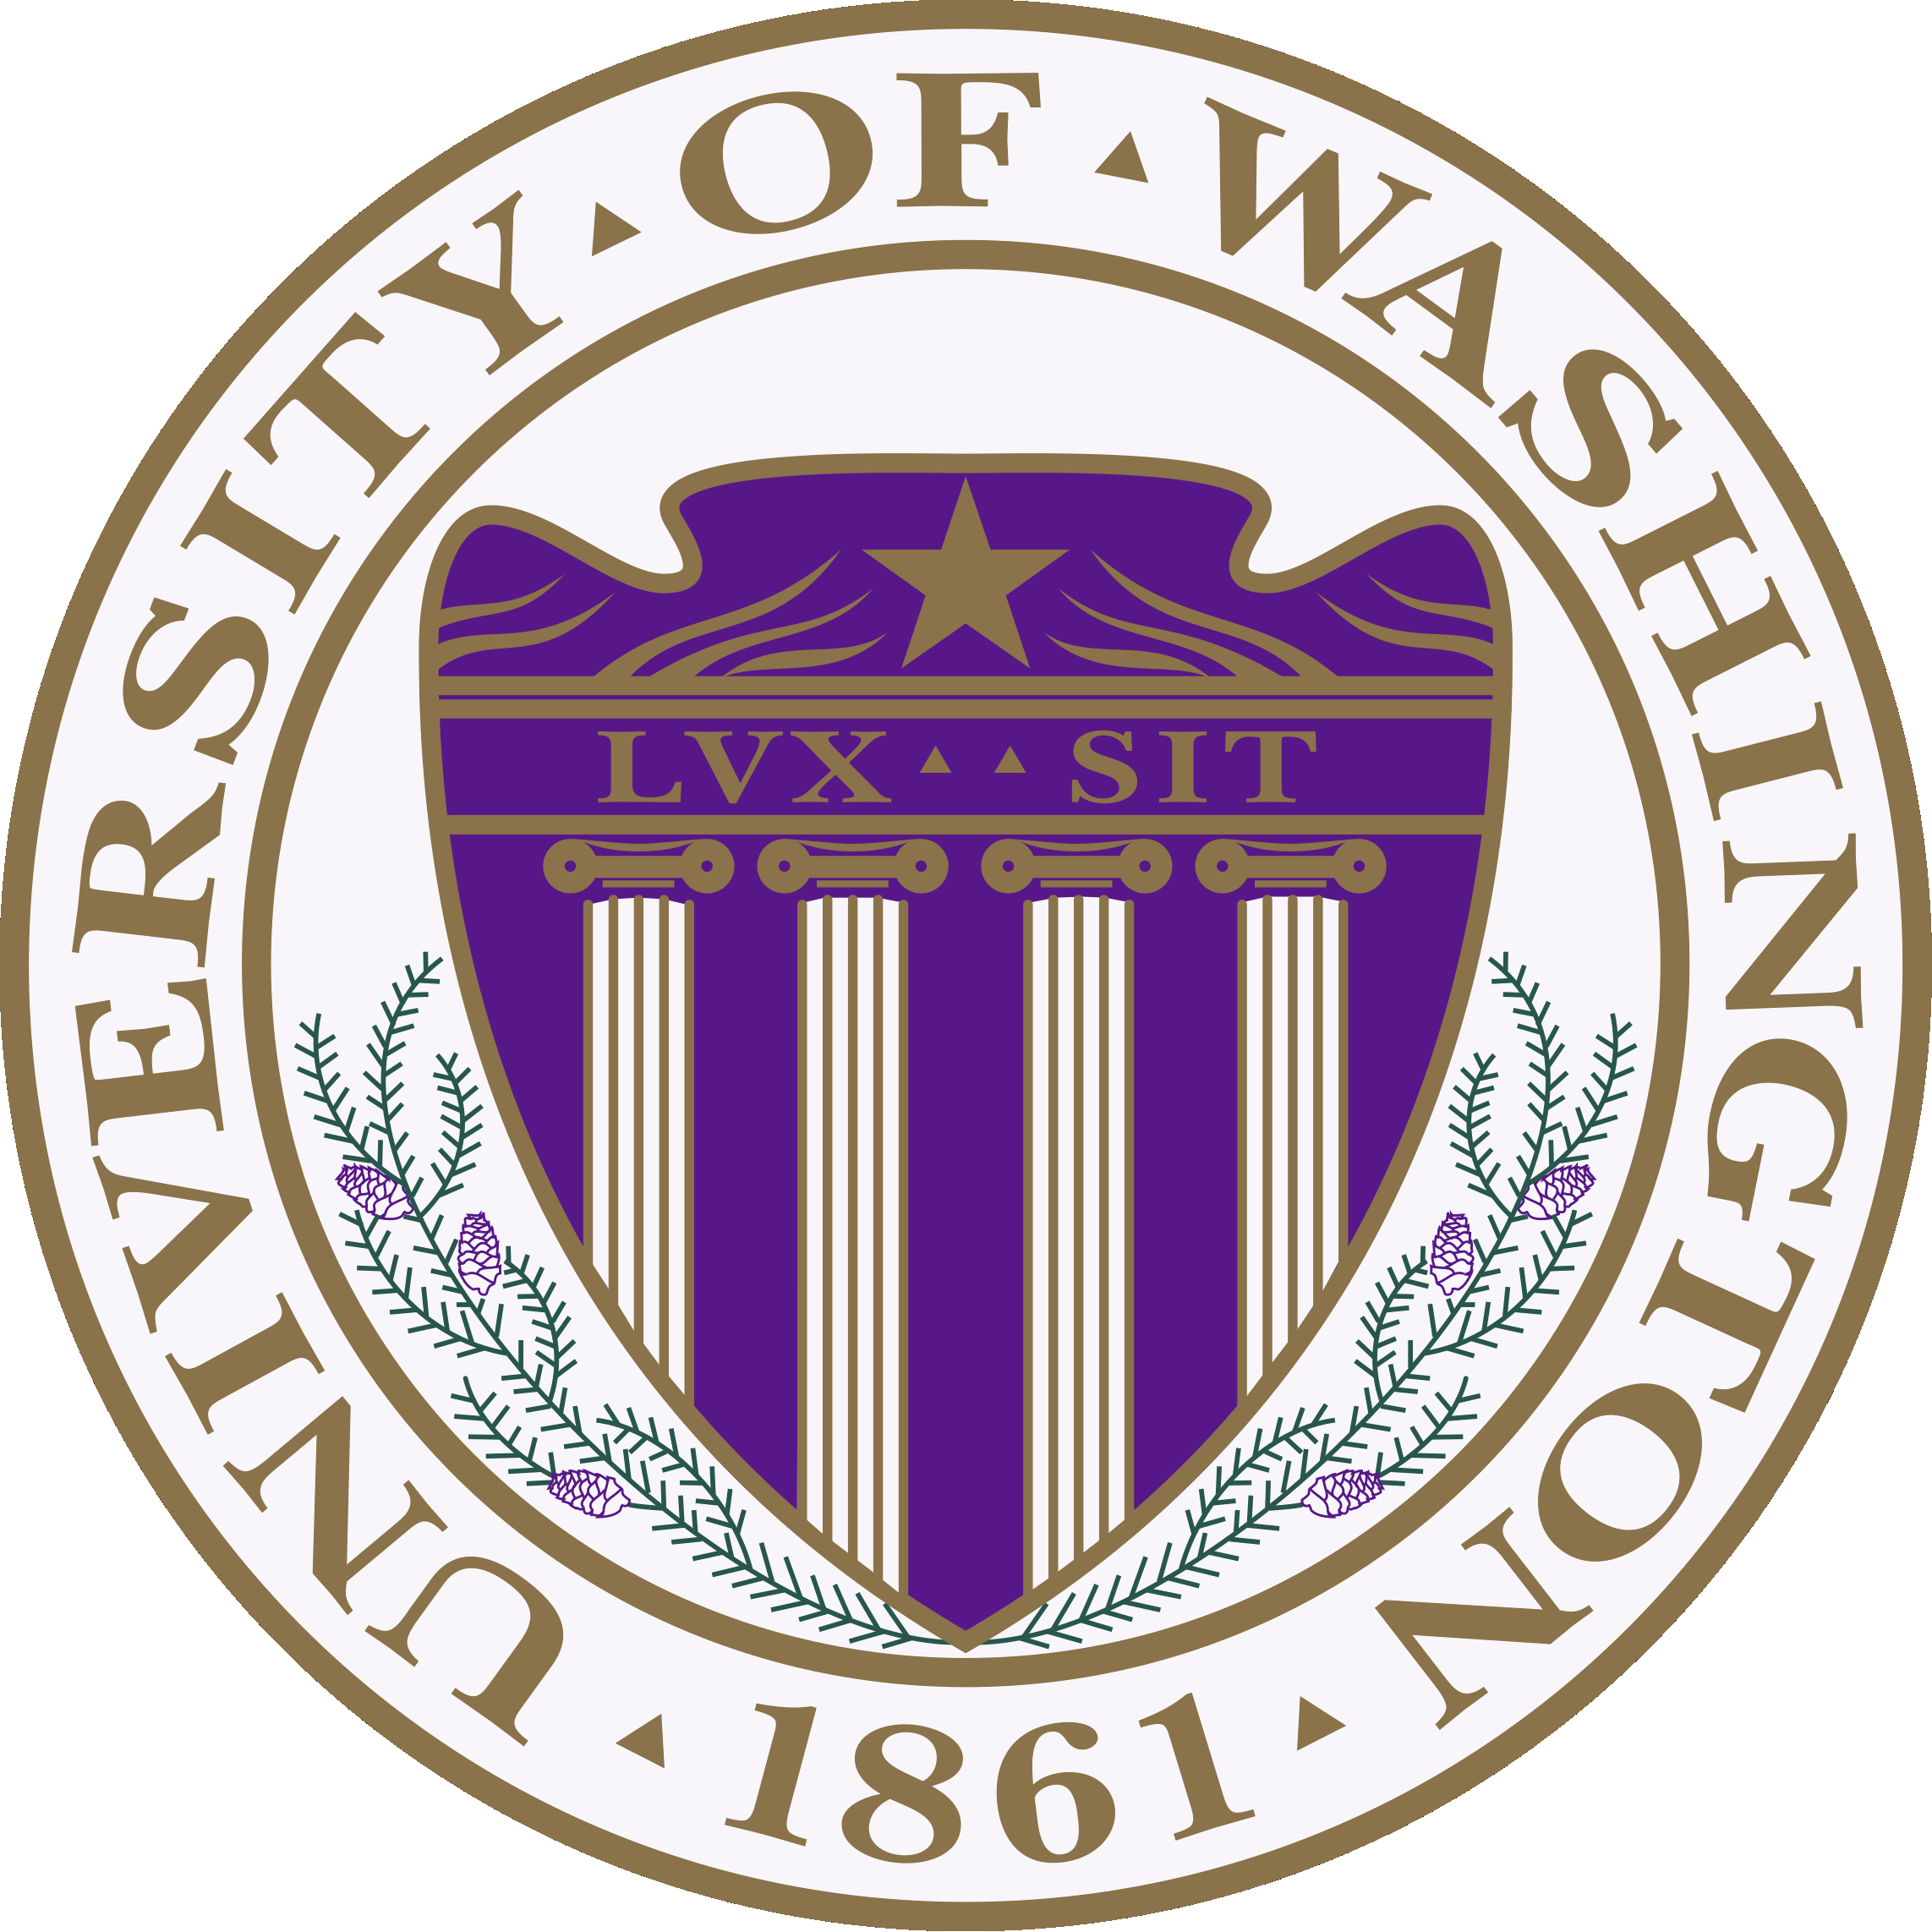 Edward Waters College Logo